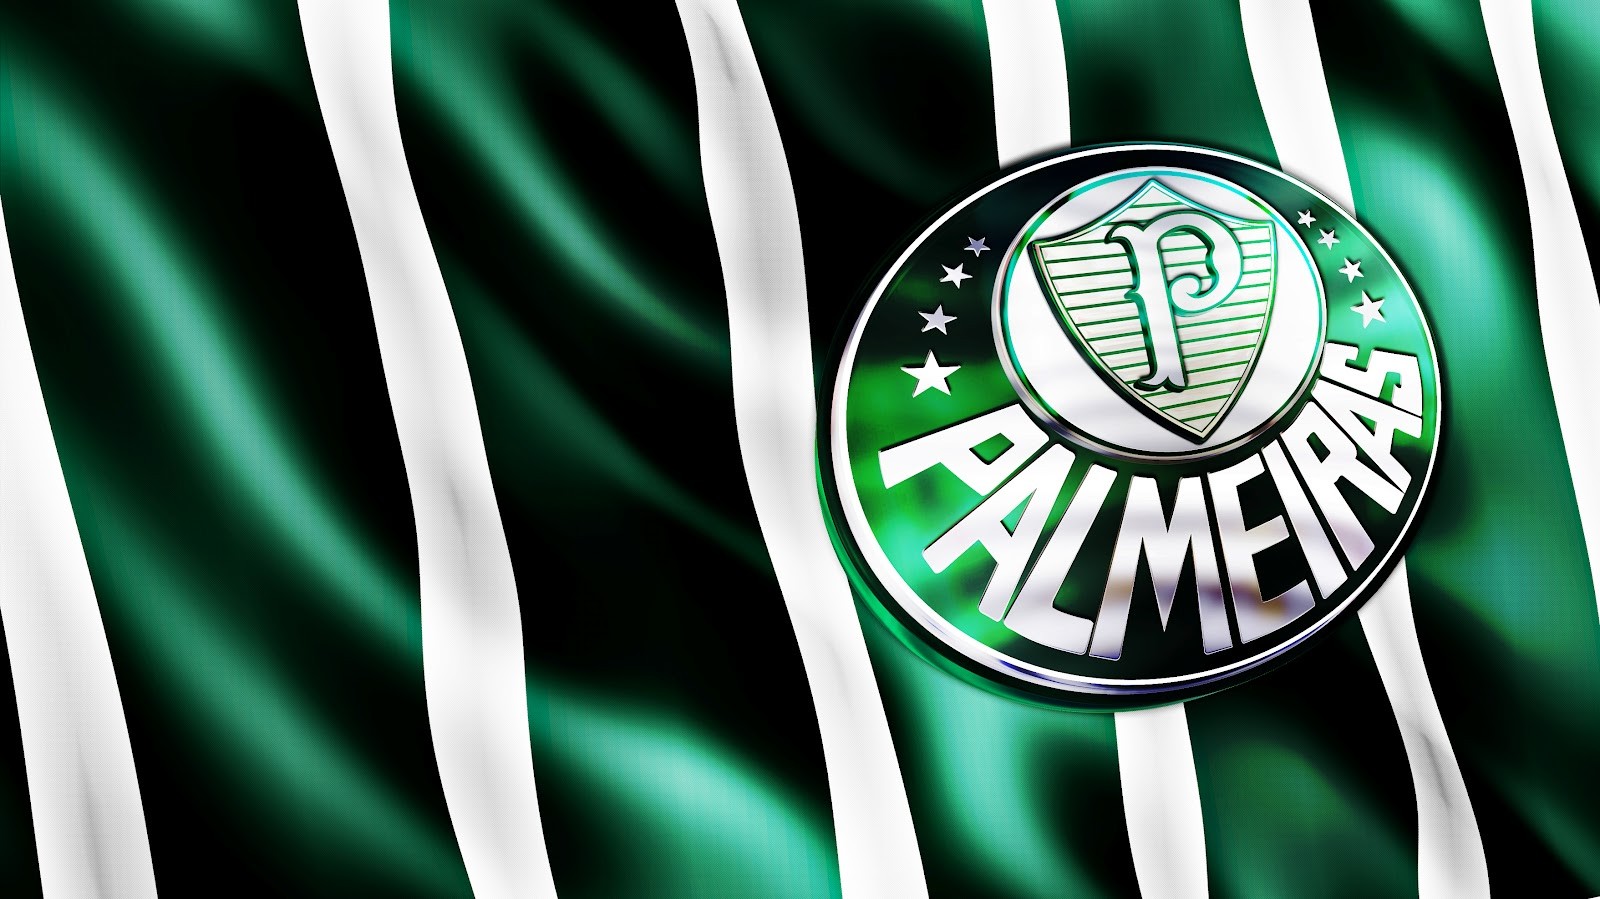 Green Soccer Team Brazil Sport Brazil Soccer Clubs 1600x899